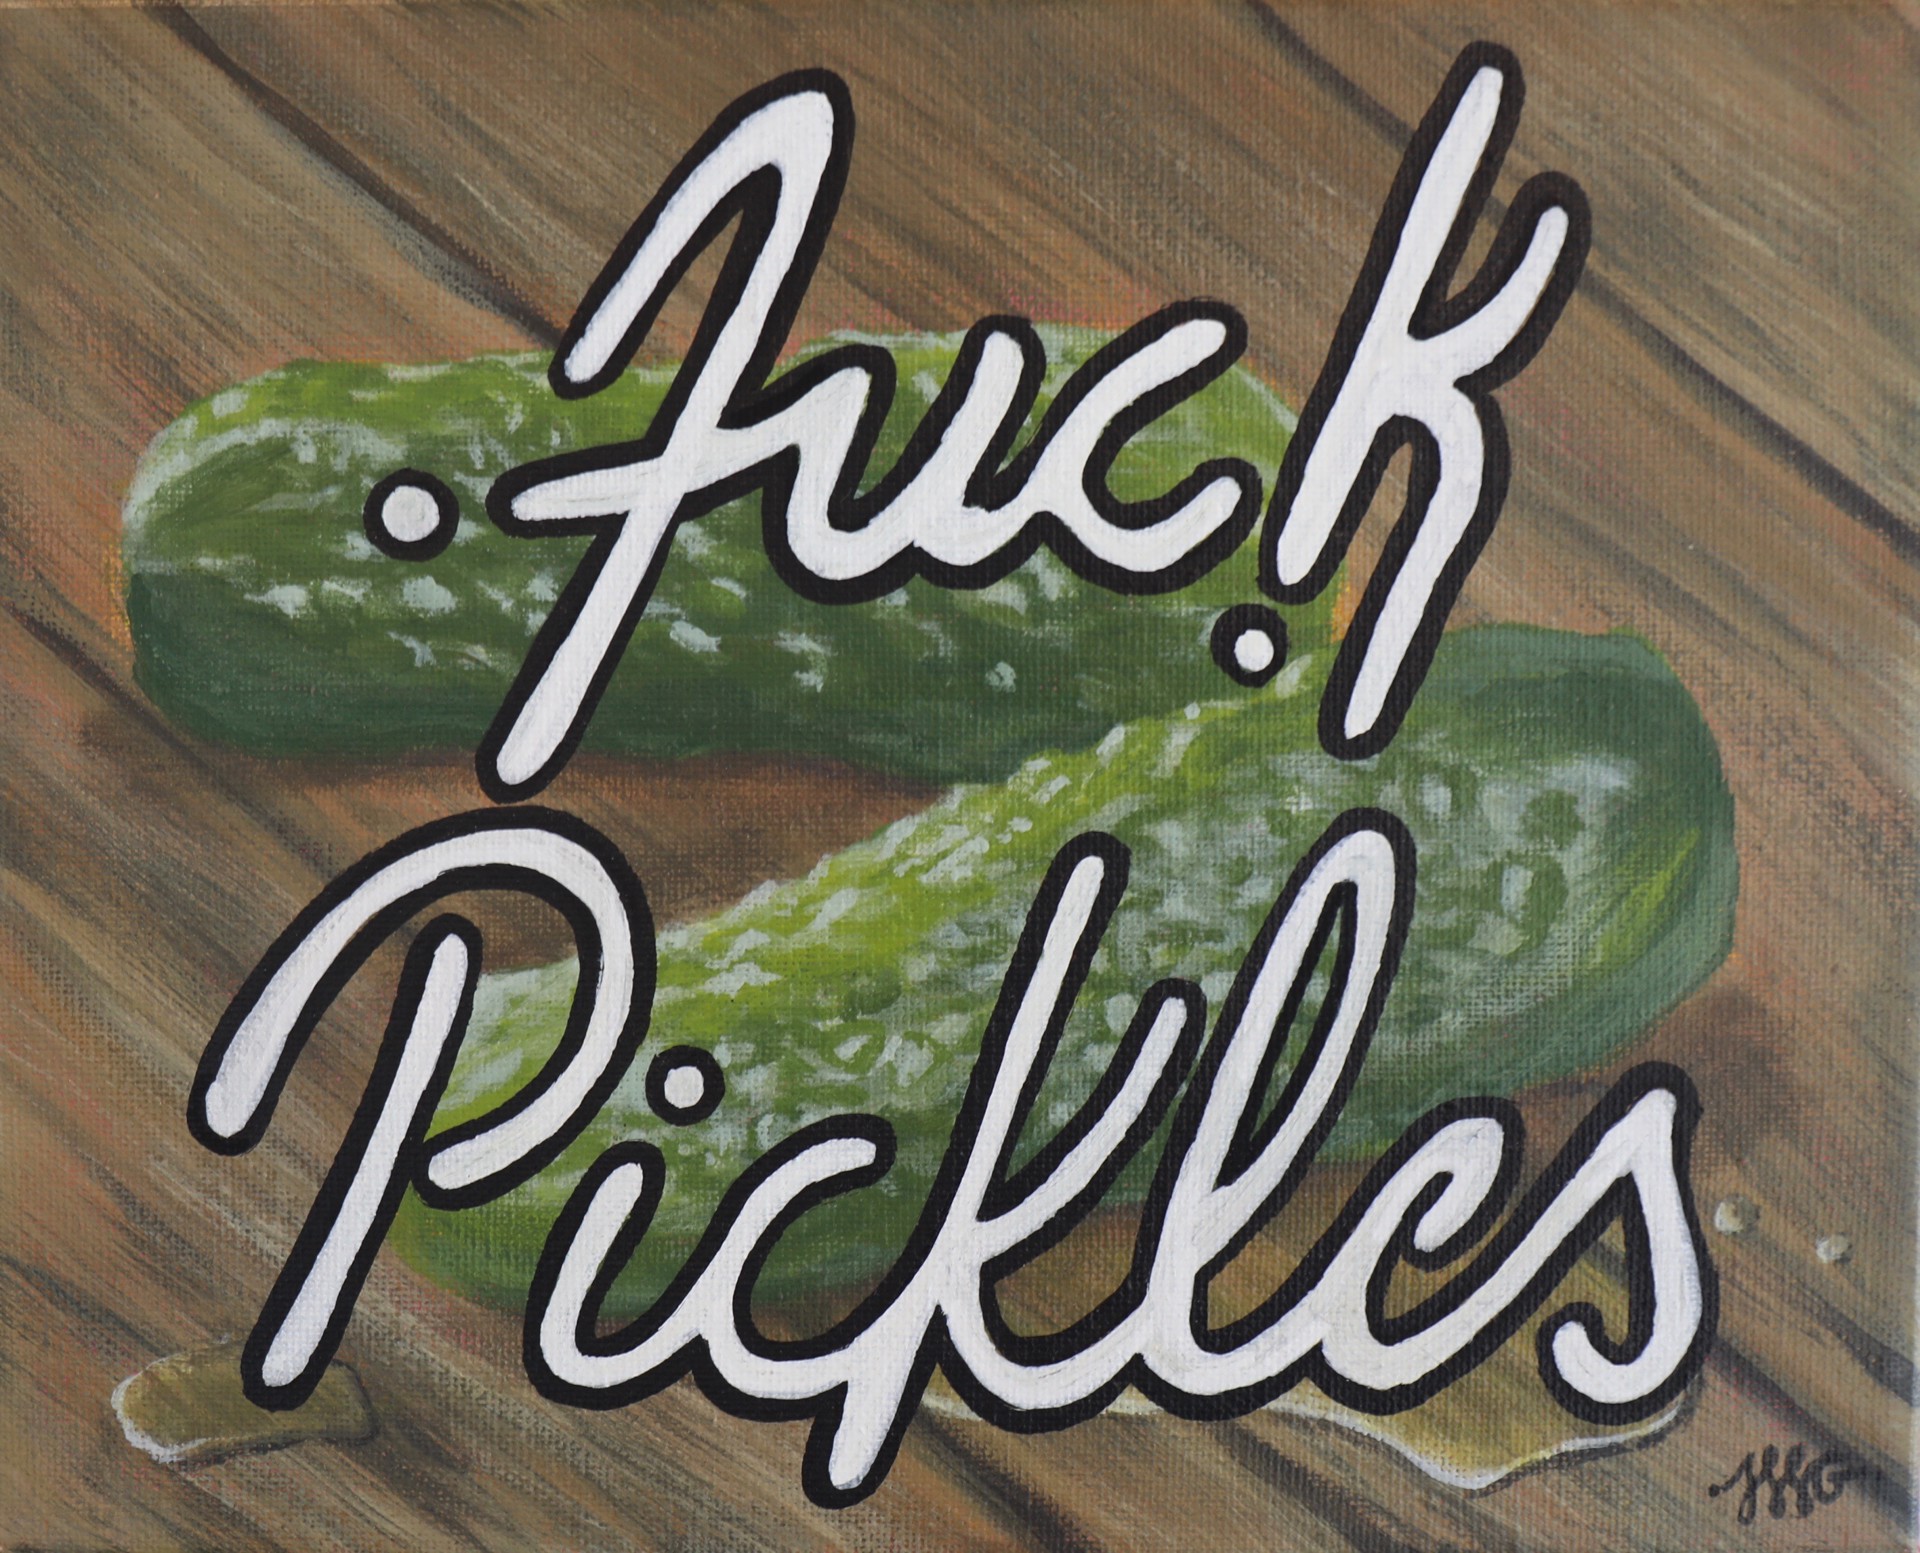 F*** Pickles by Joe Gifford